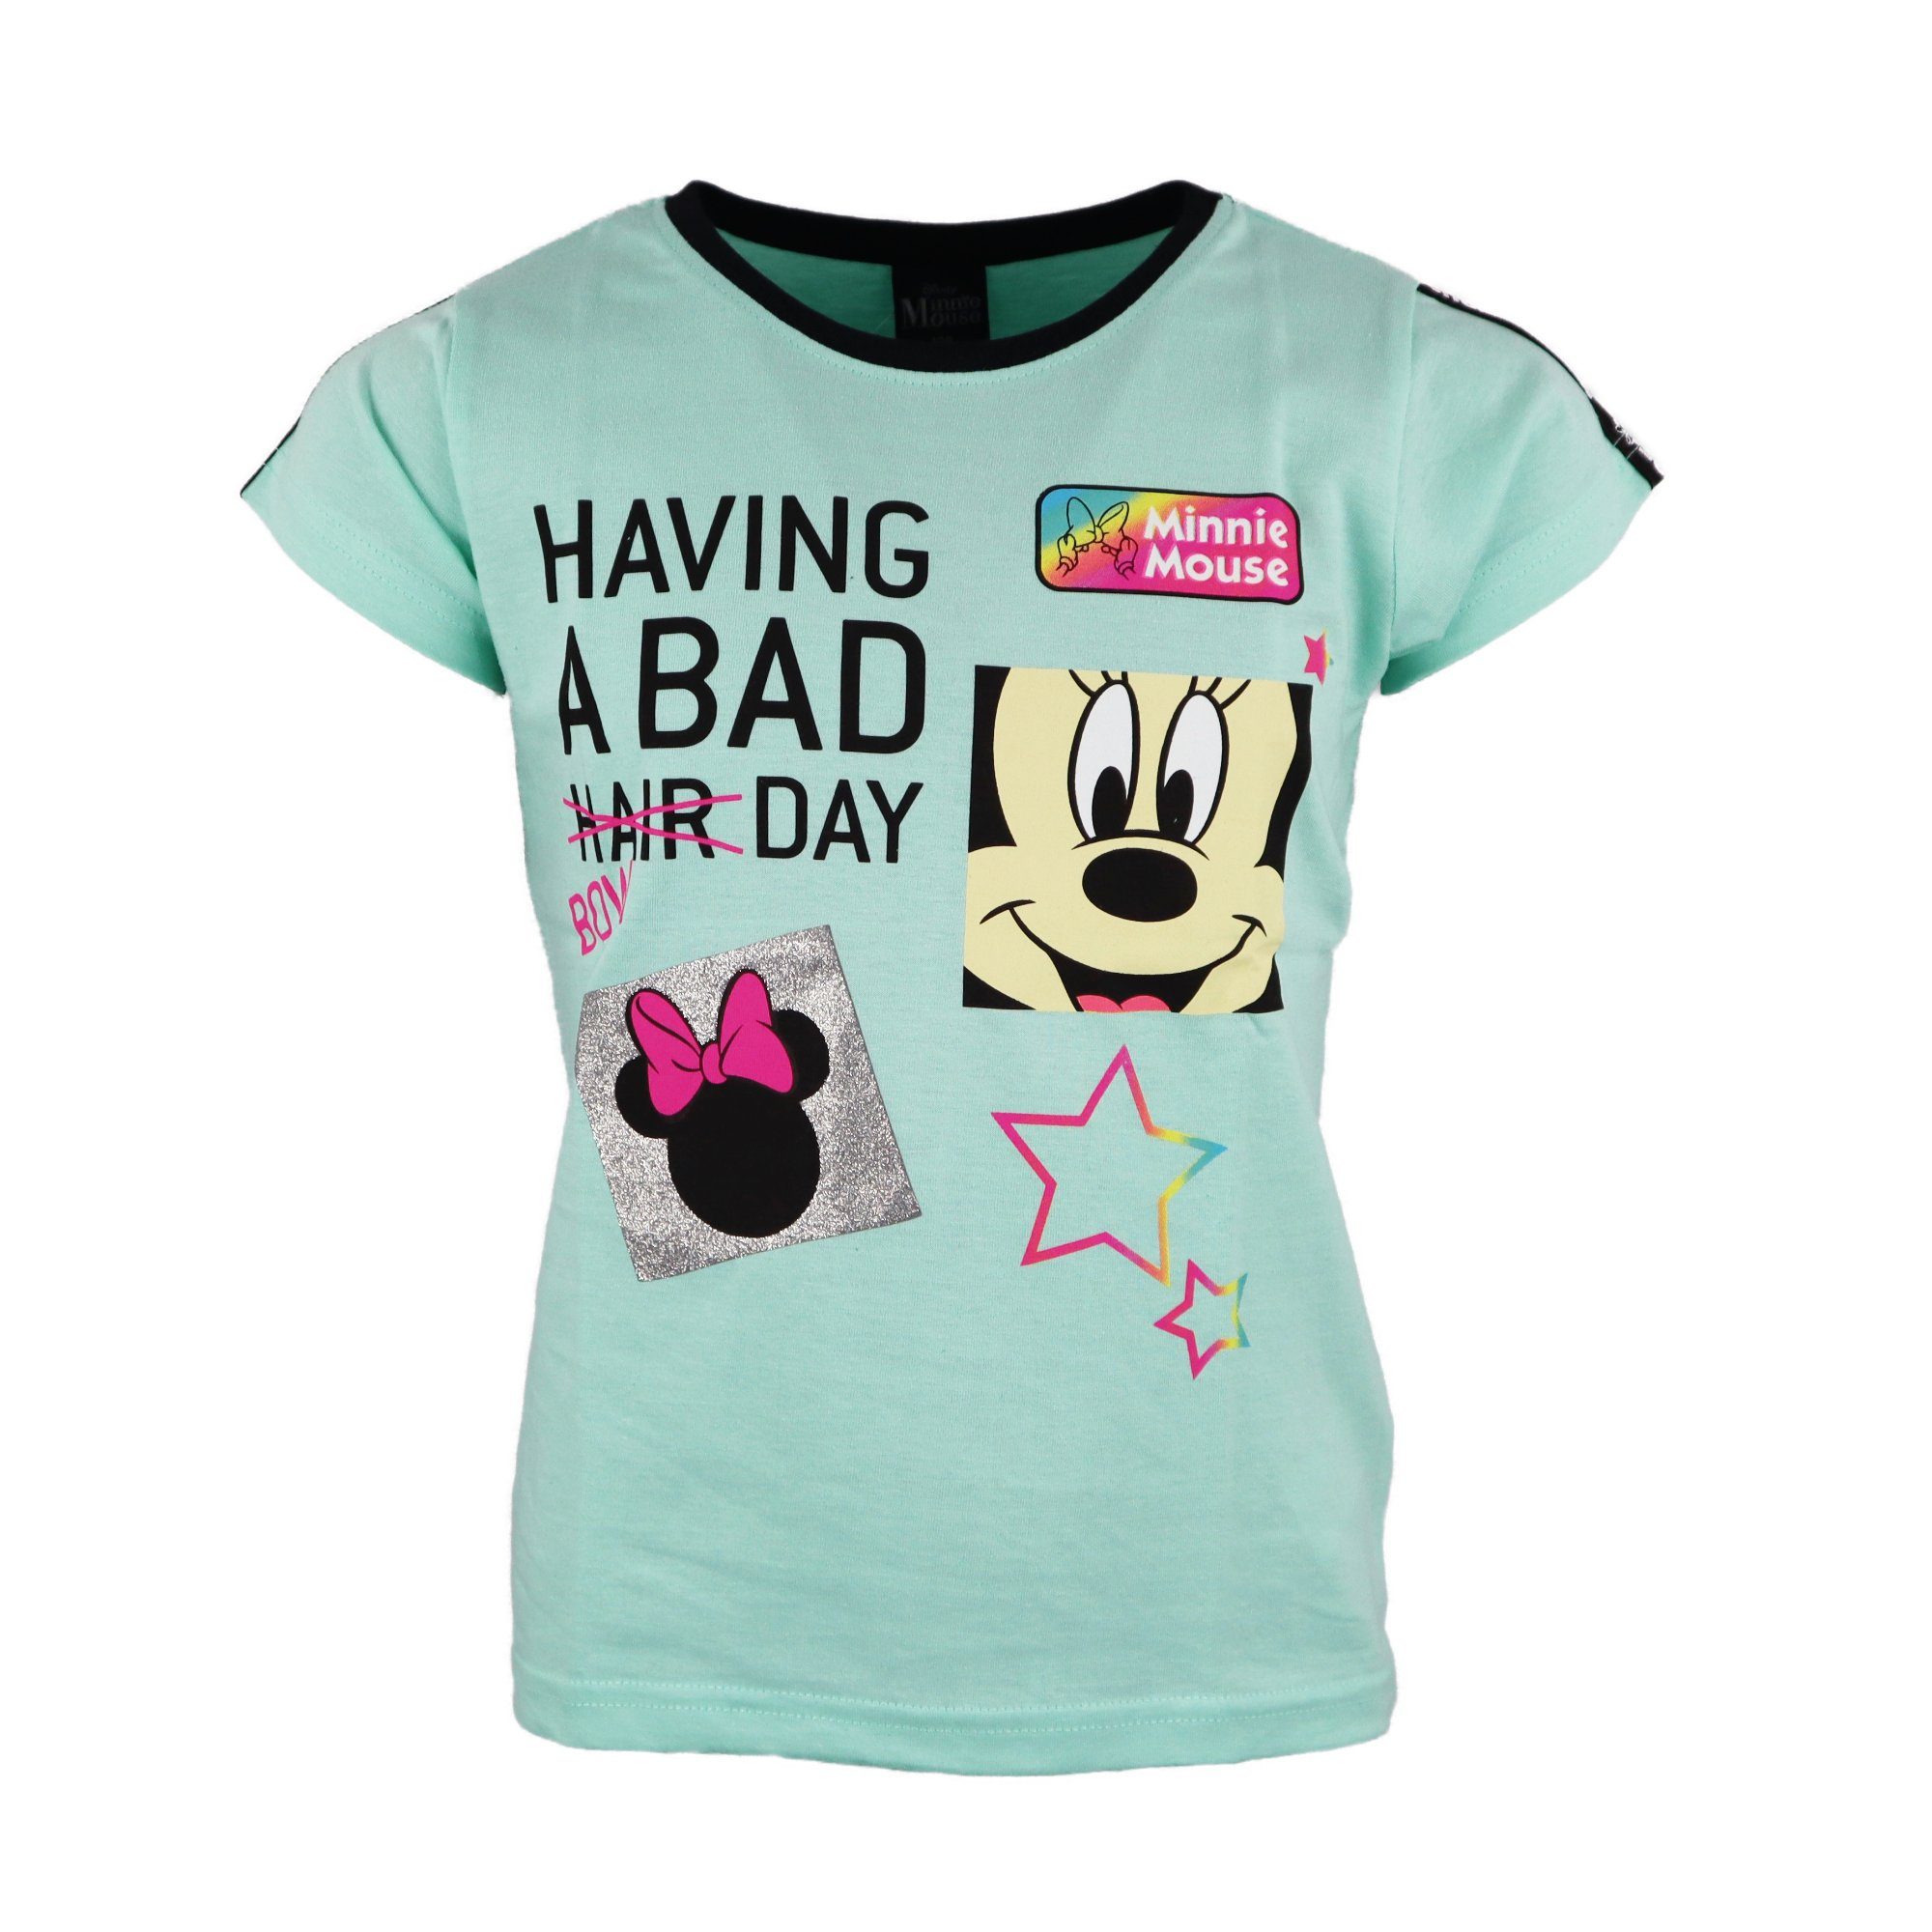 Disney Minnie Mouse 100% Rosa, 134, Grün Maus Mädchen bis Baumwolle, Print-Shirt Gr. Kinder Minnie T-Shirt 104